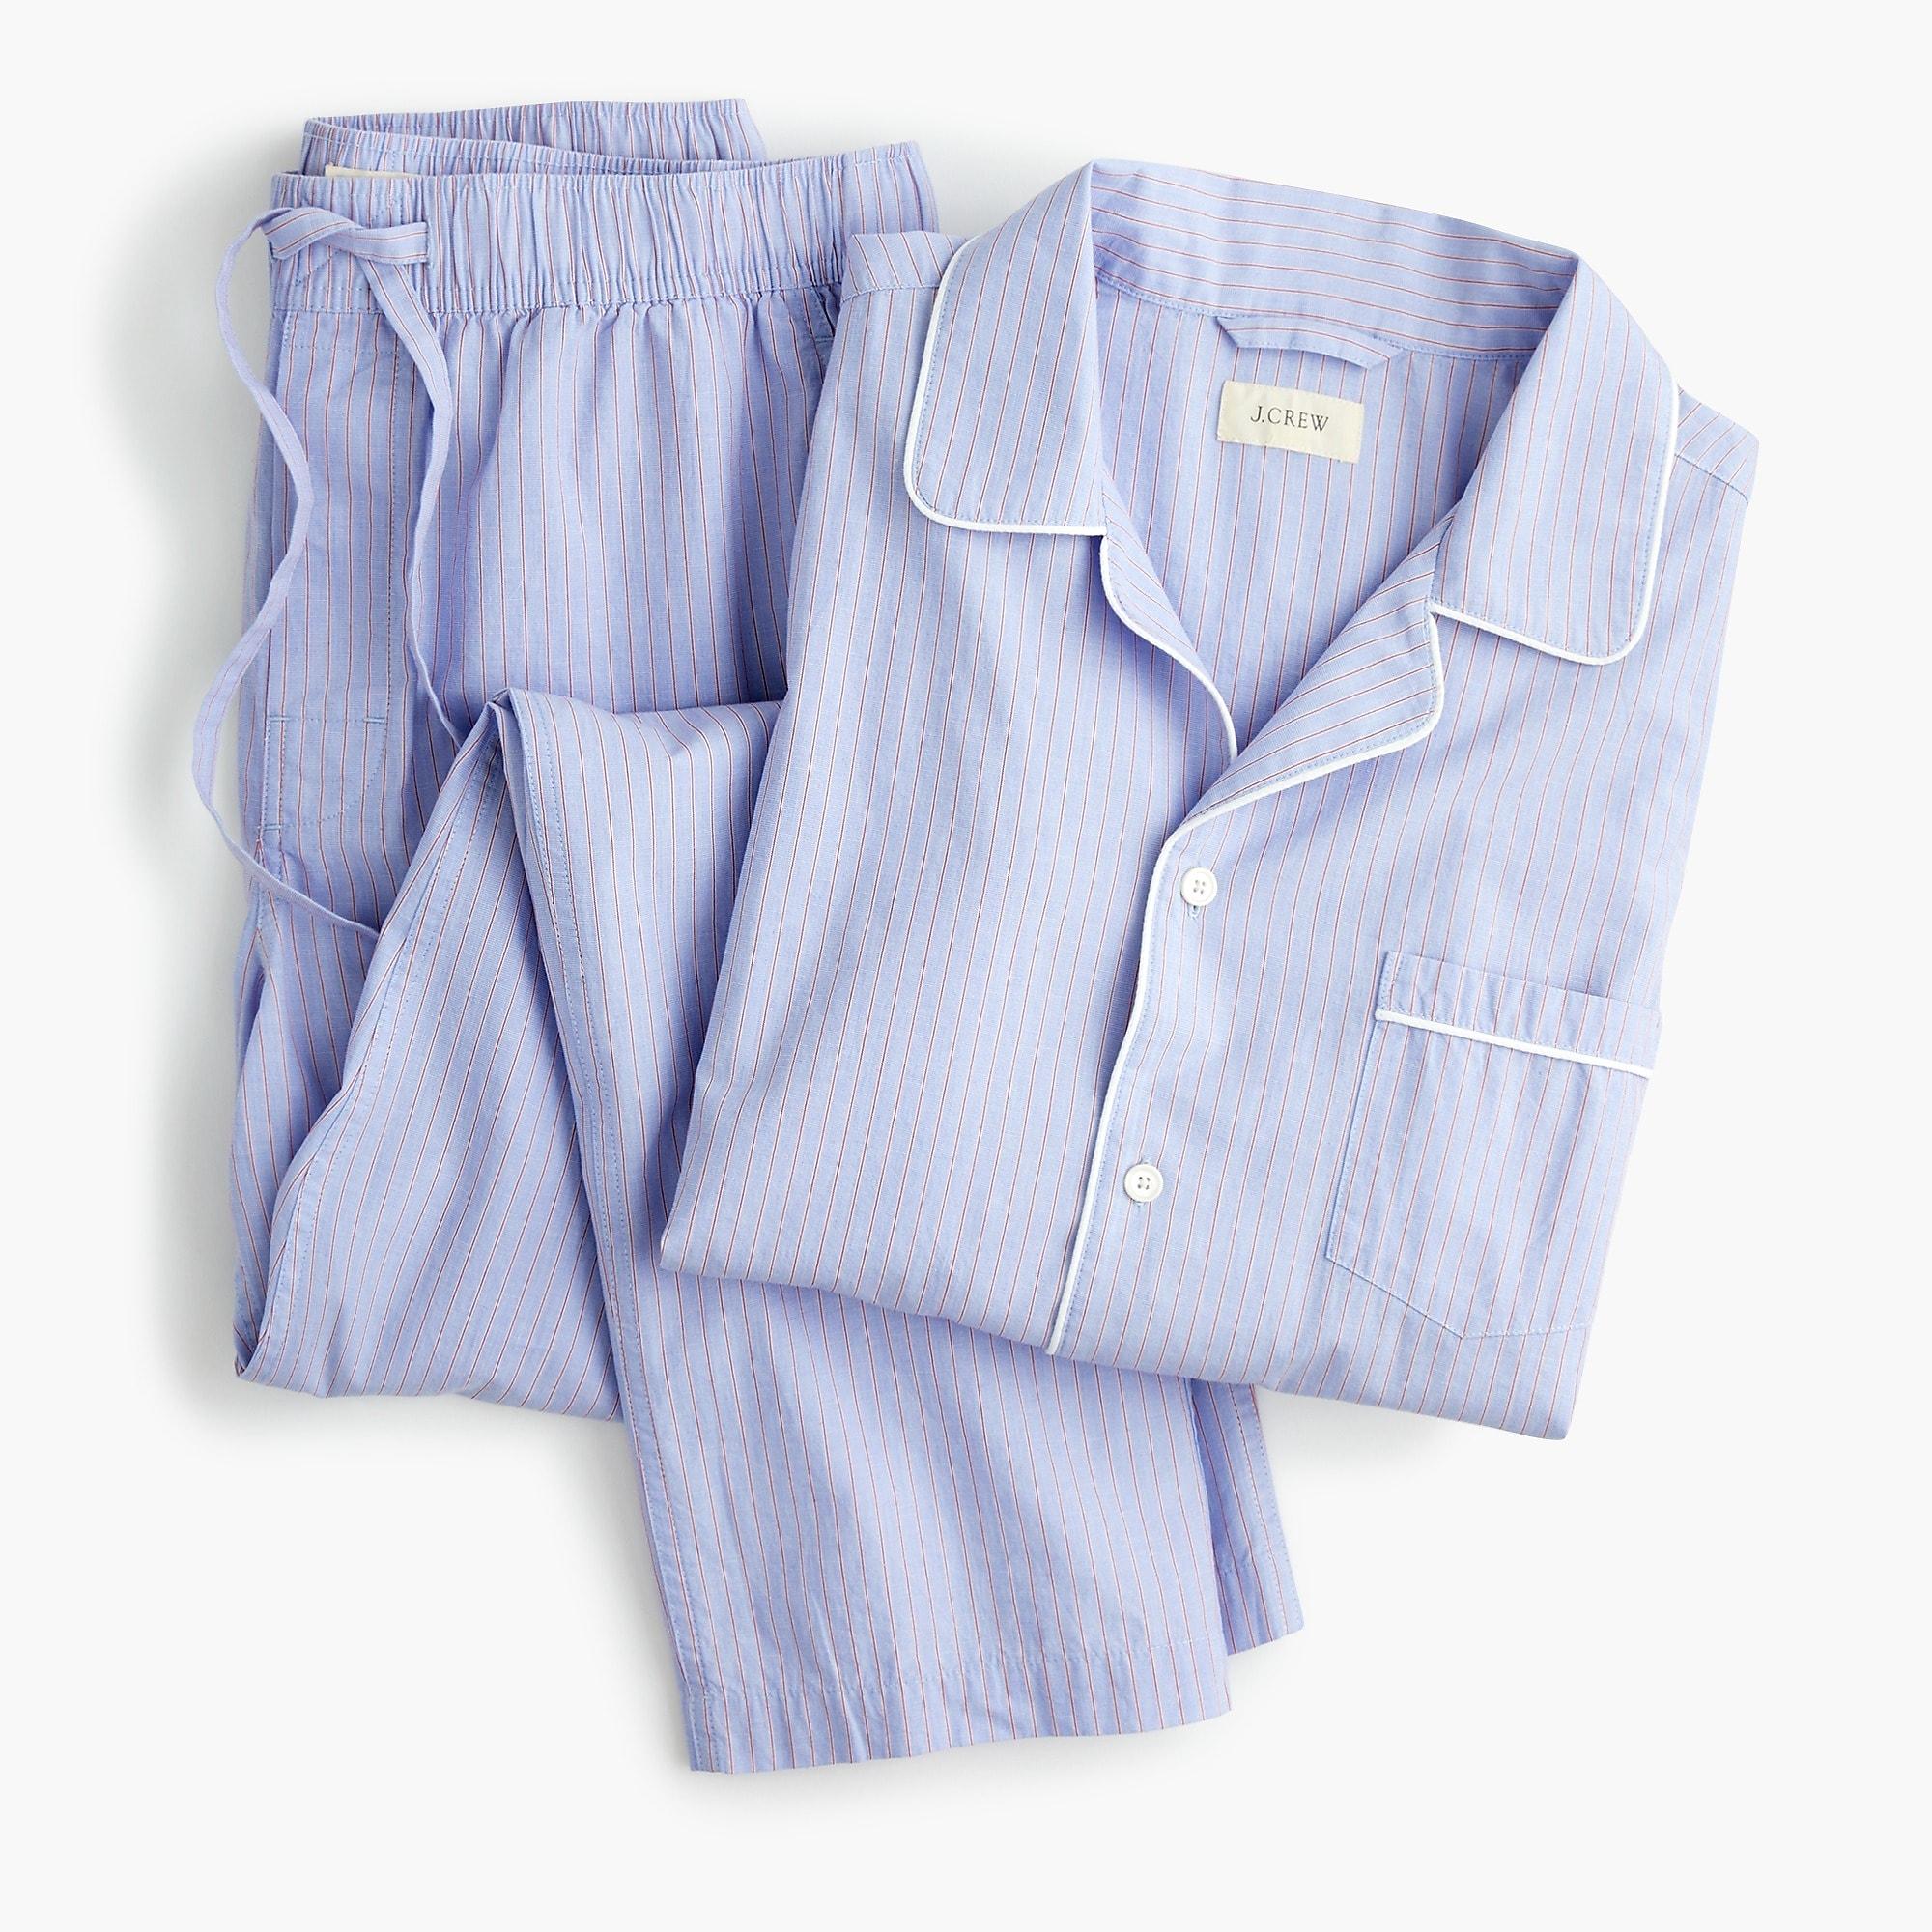 J.Crew Pajama Set In Cotton Poplin in Blue for Men - Lyst